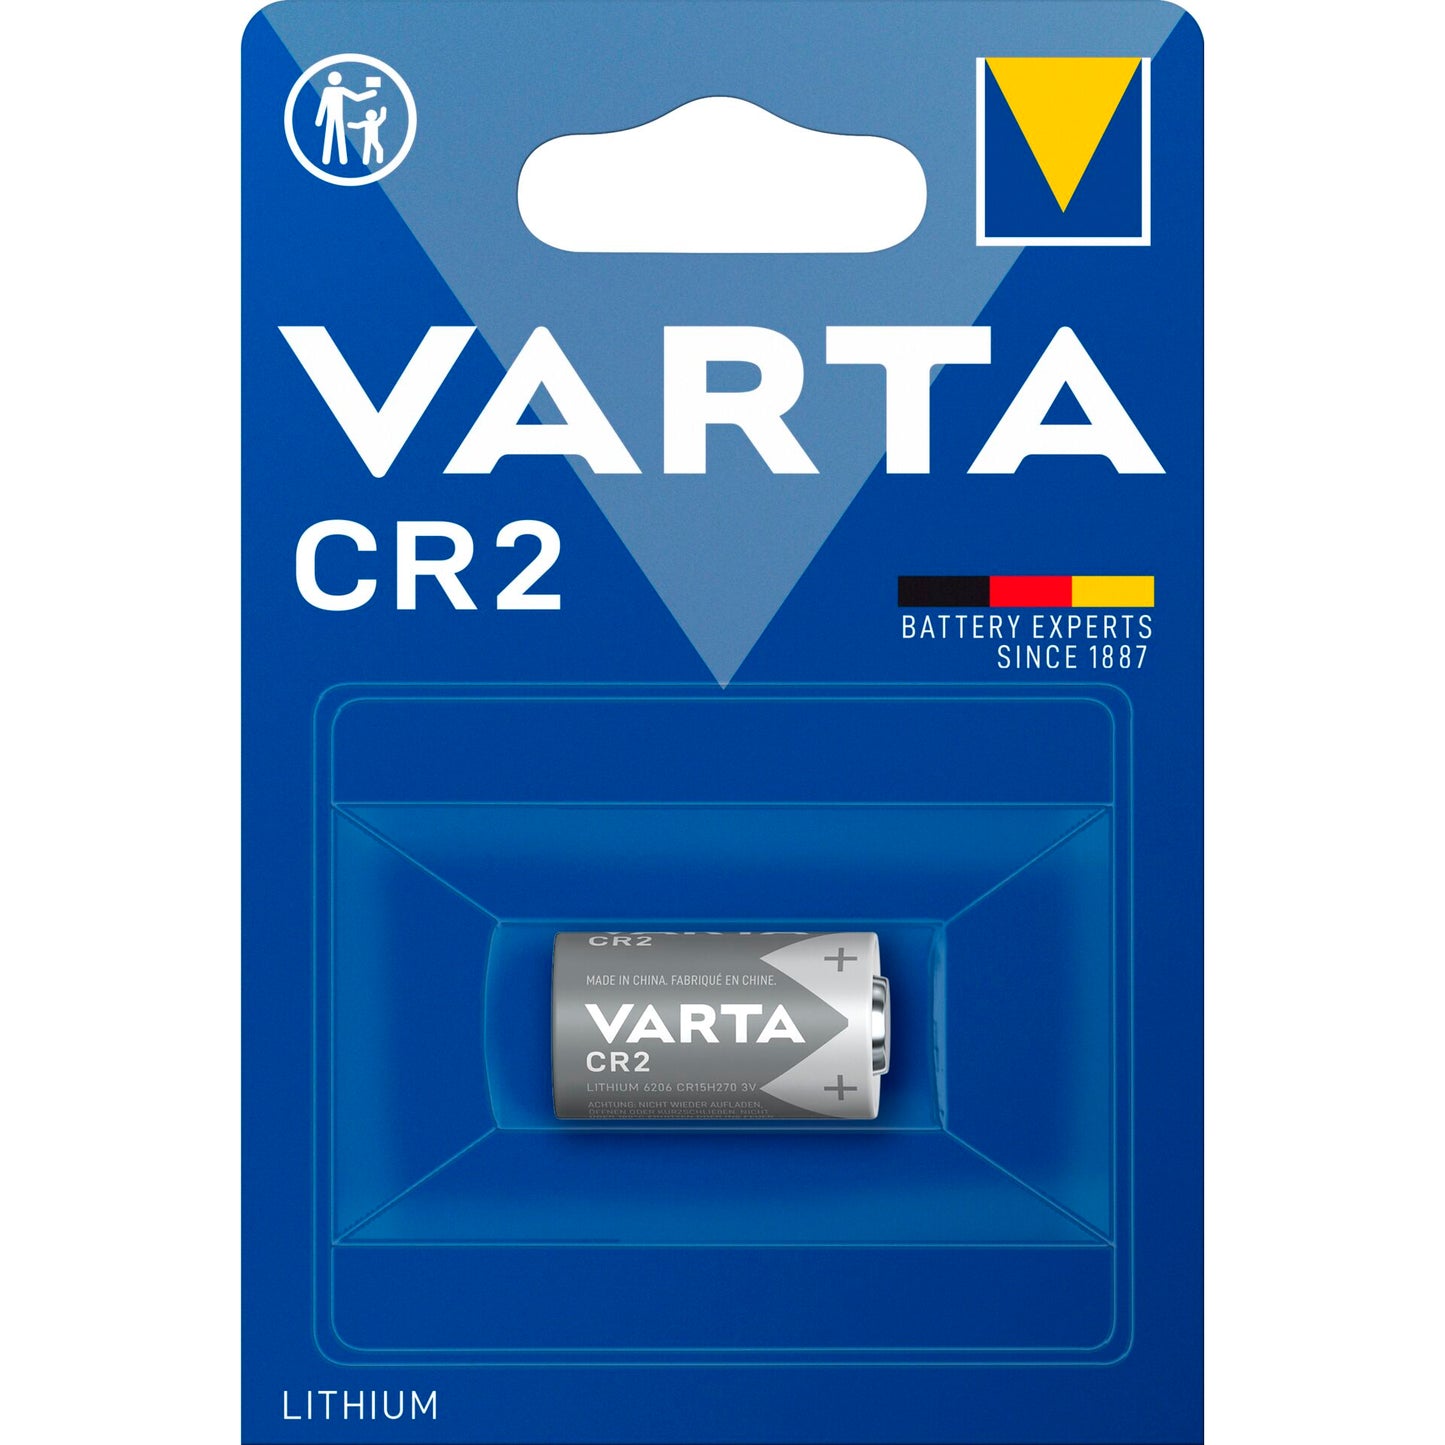 Varta CR2 3V Lithium Battery